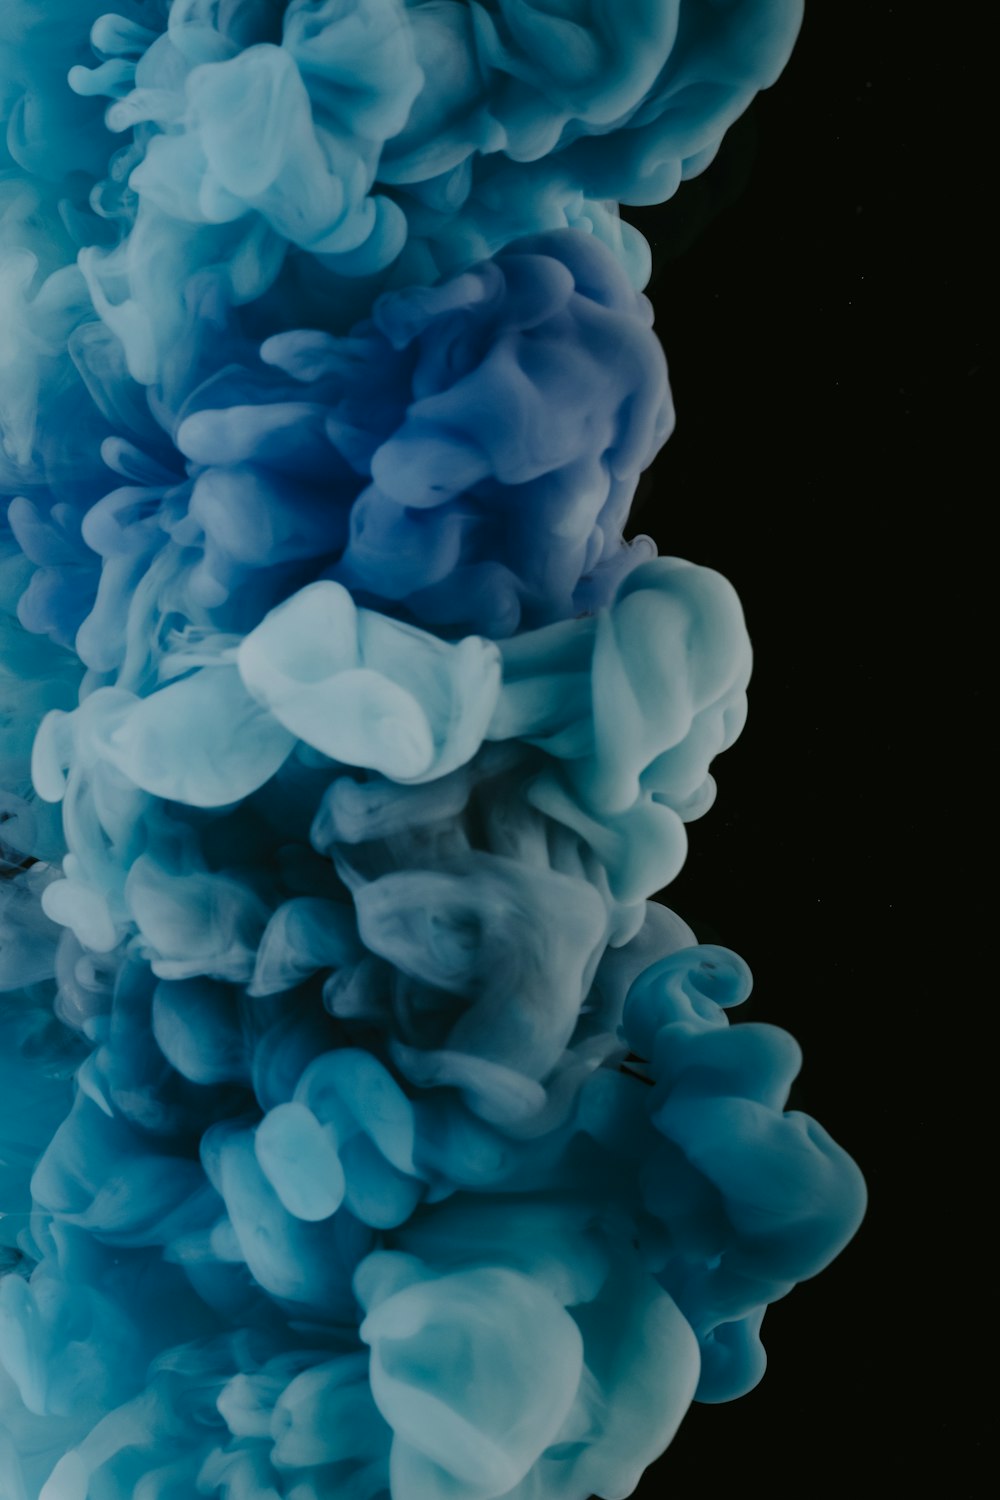 blue smoke on black background photo – Free Pattern Image on Unsplash